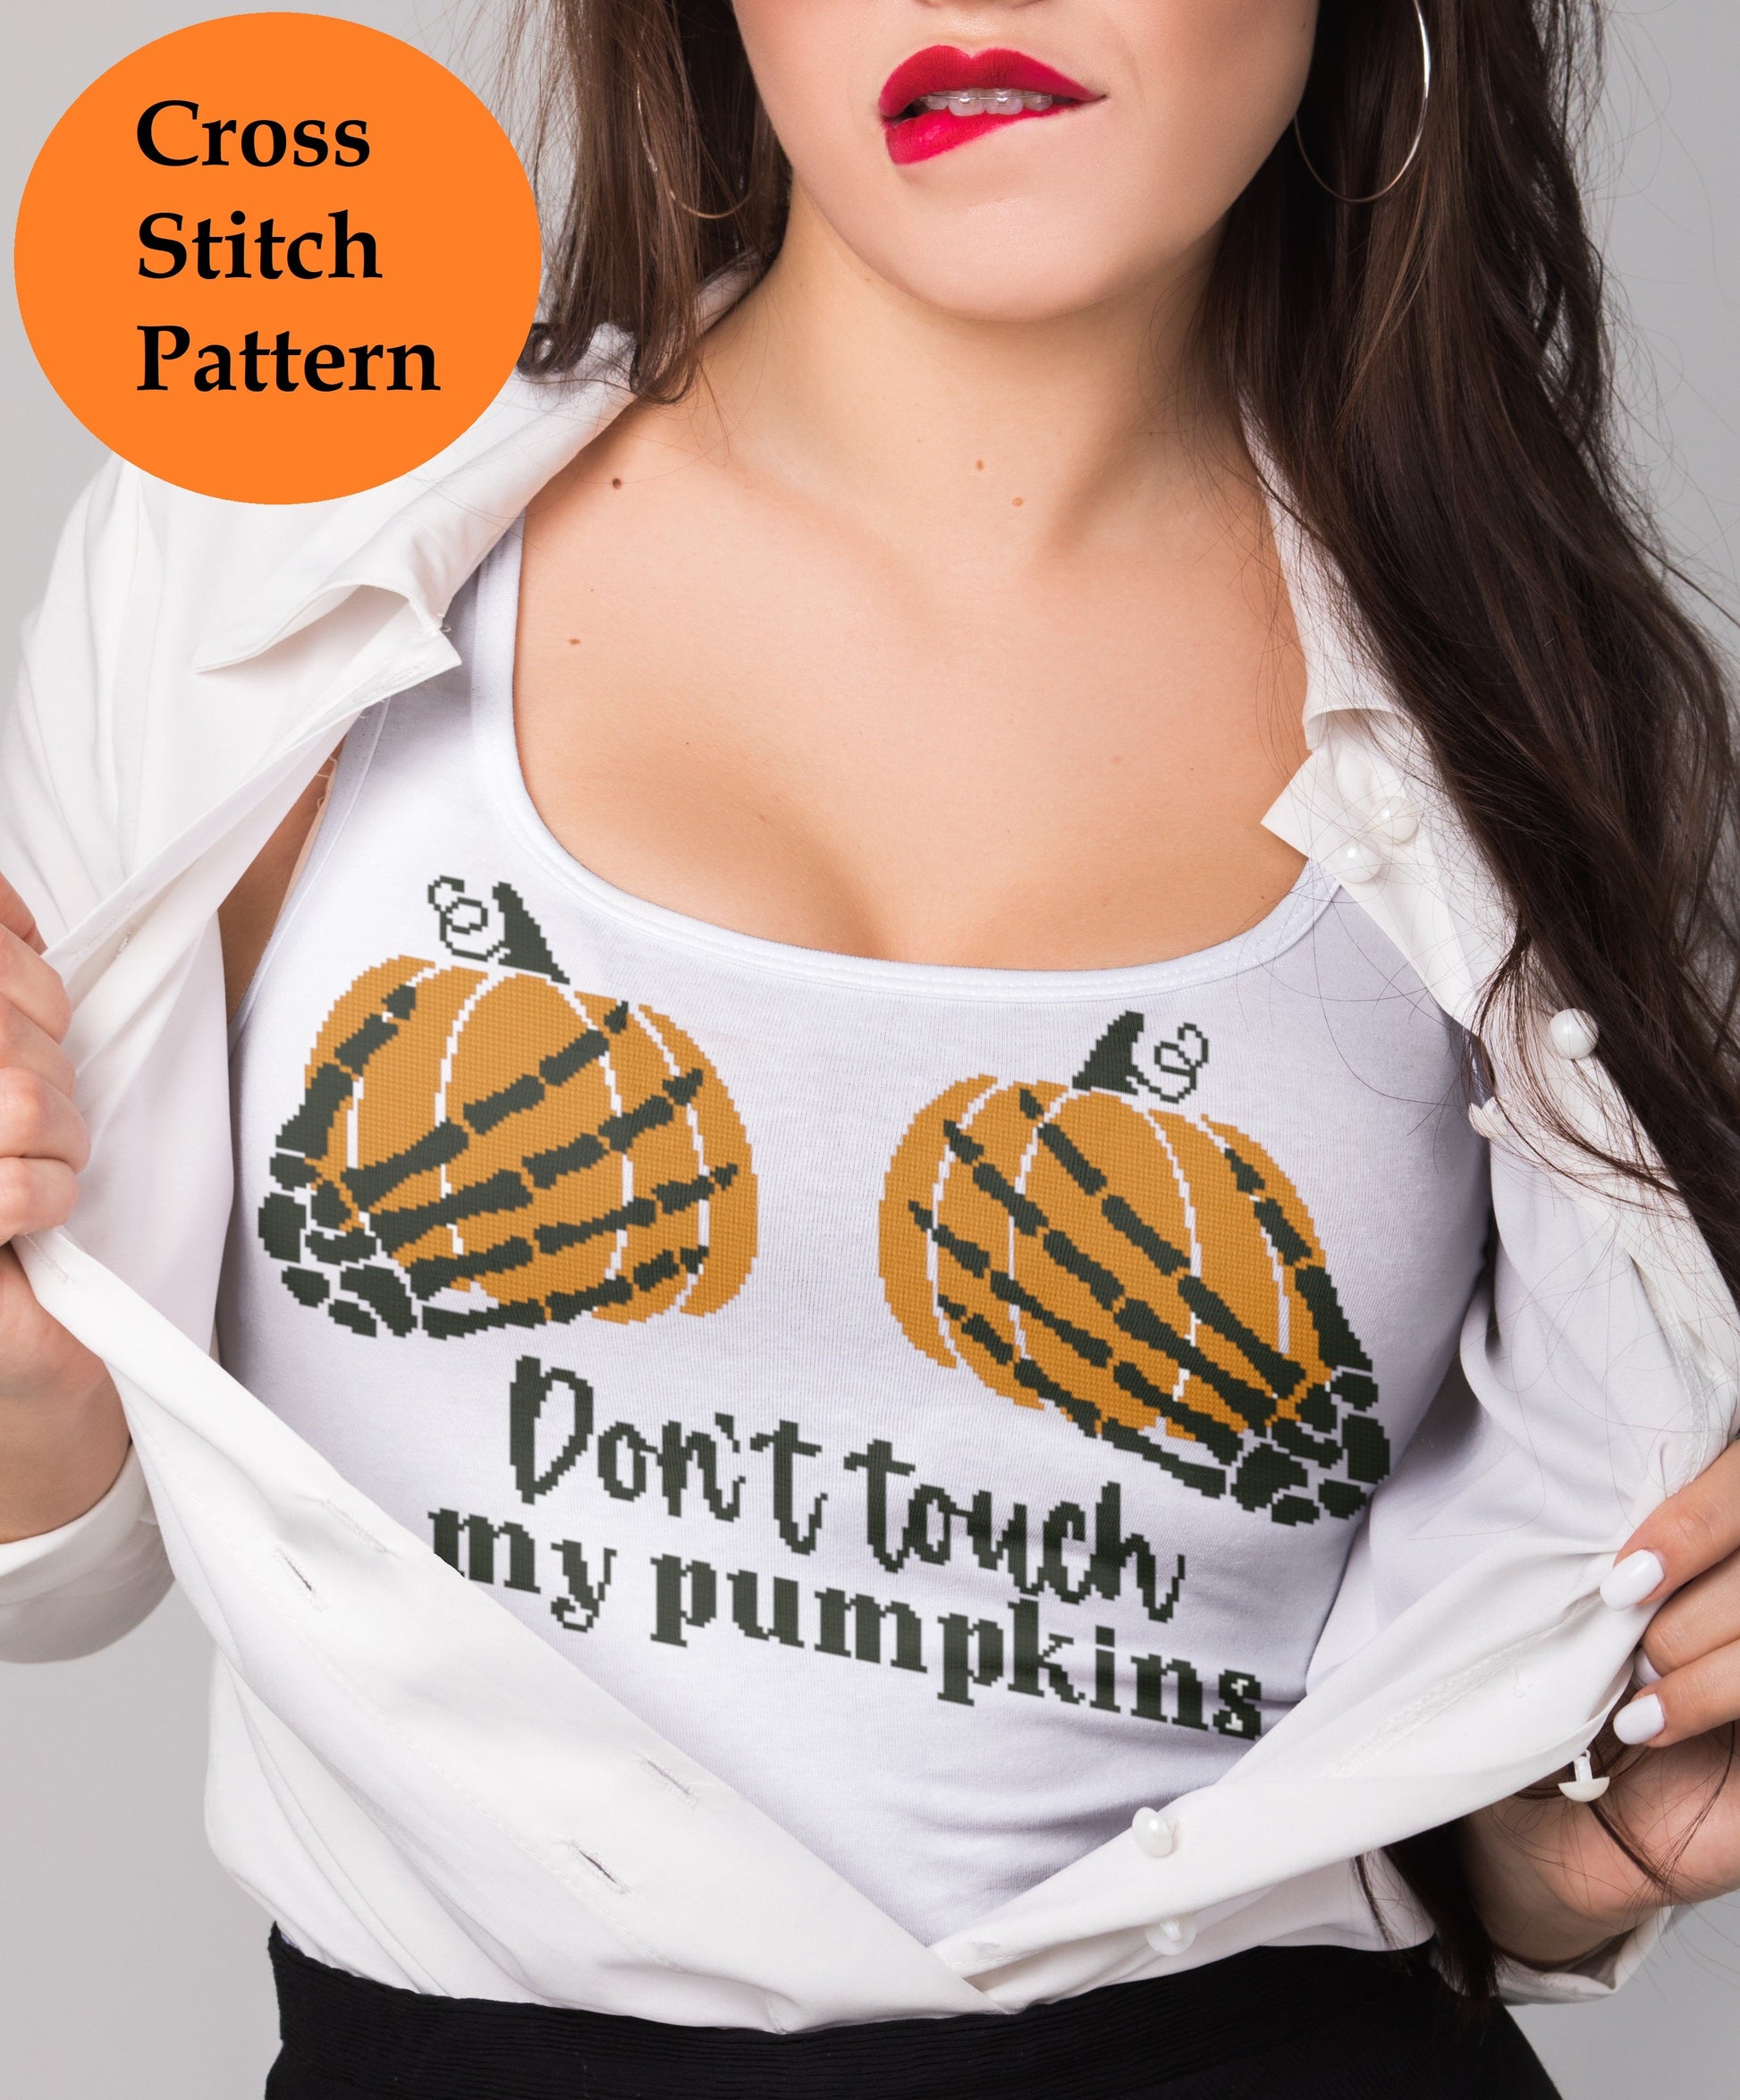 Don't touch my pumpkins cross stitch pattern